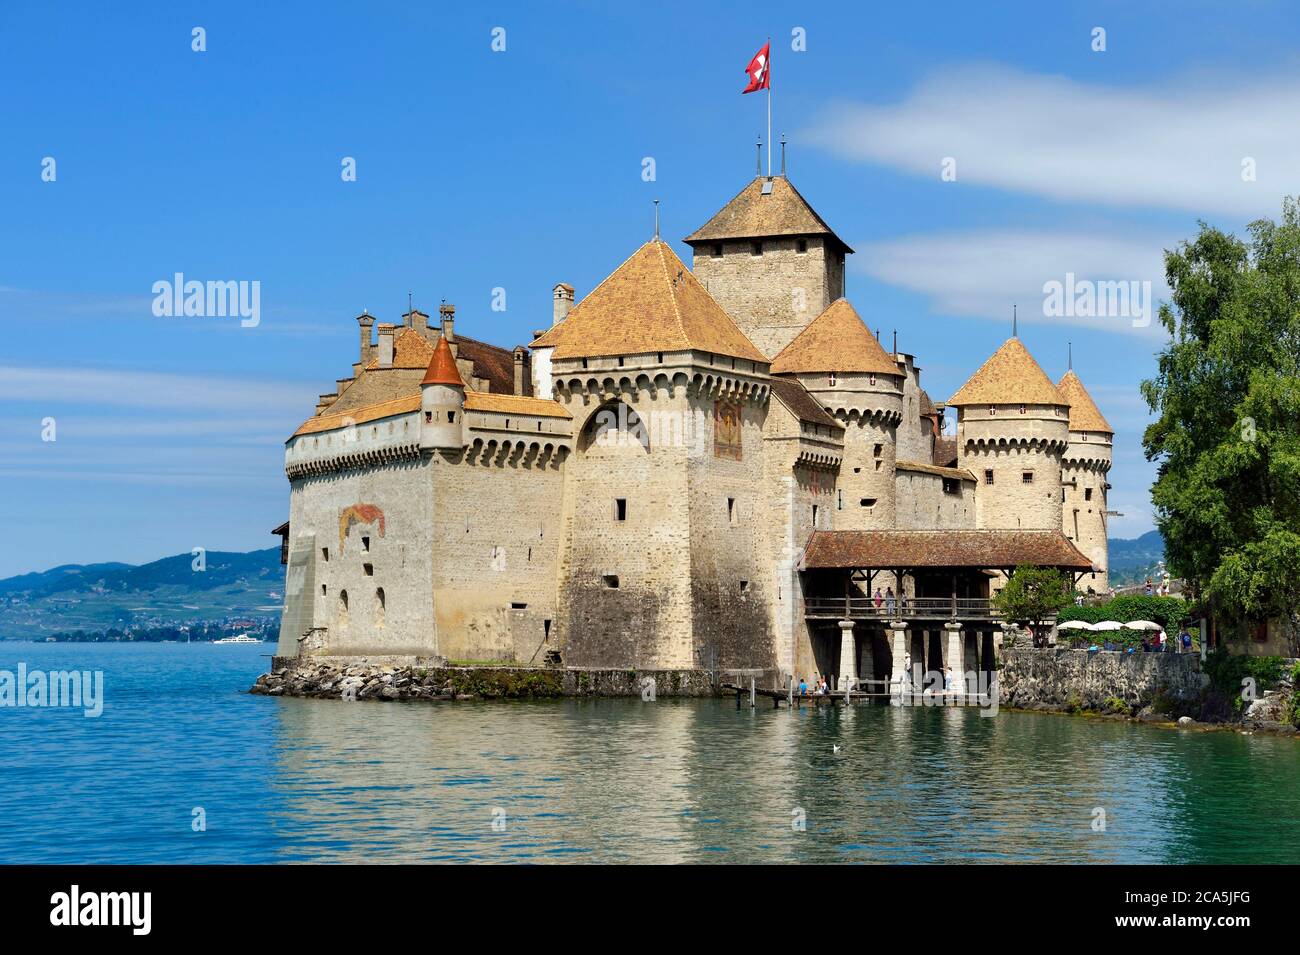 Switzerland, Canton of Vaud, Veytaux, Chillon castle on the shores of Lake Geneva (Lac Leman) Stock Photo